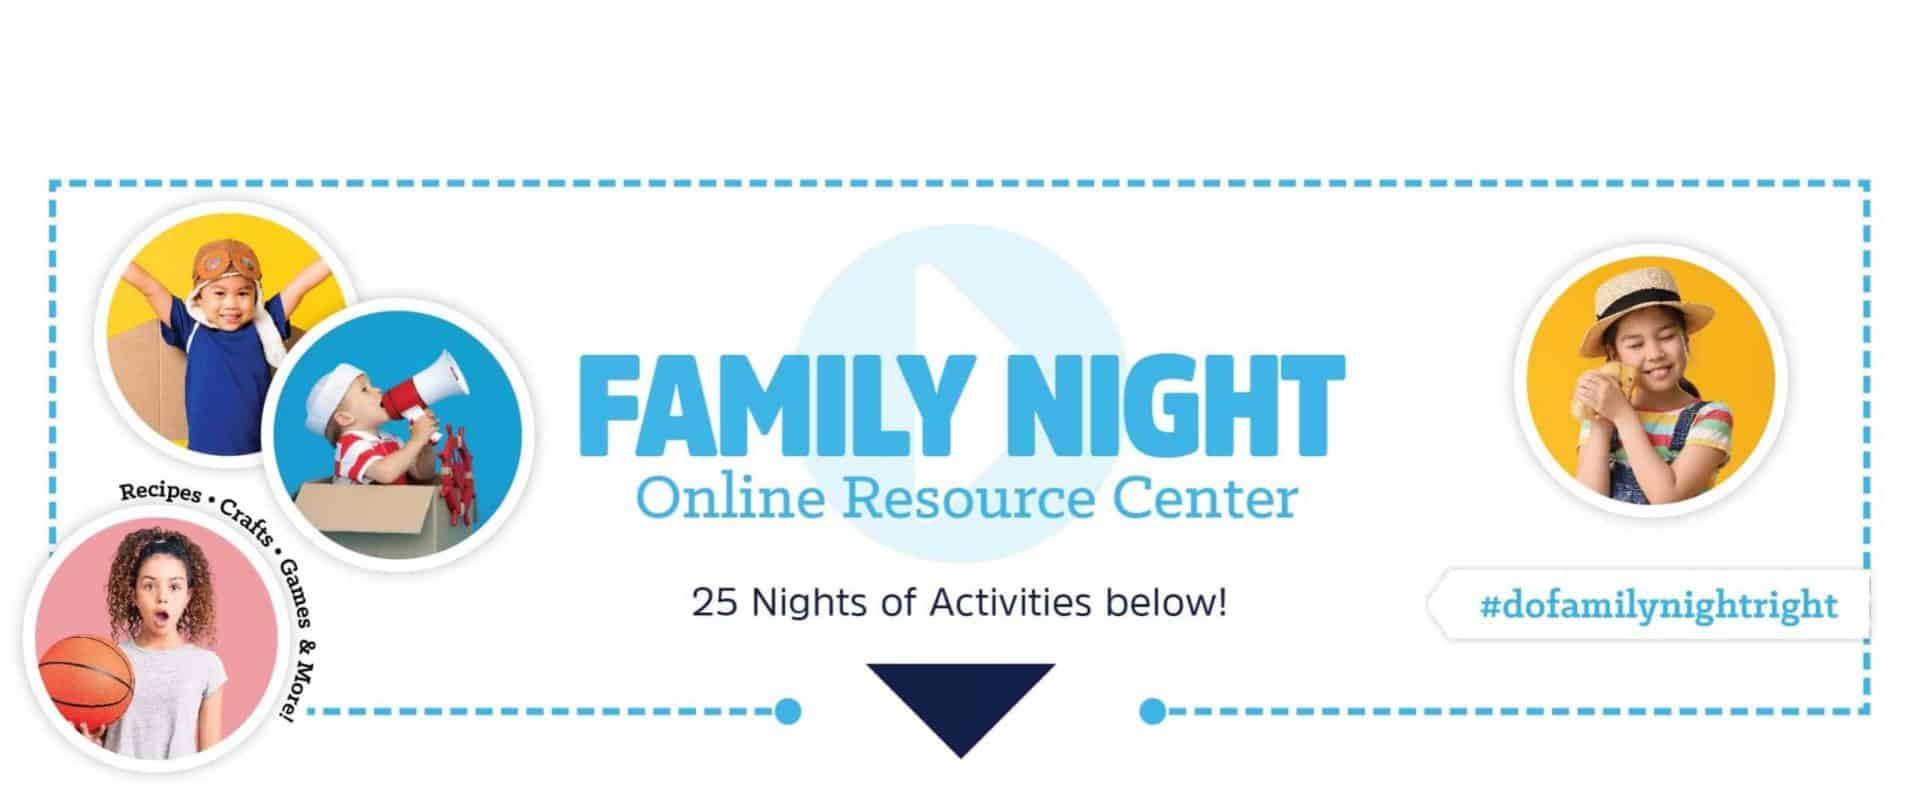 FAMILY NIGHT Online Resource Center